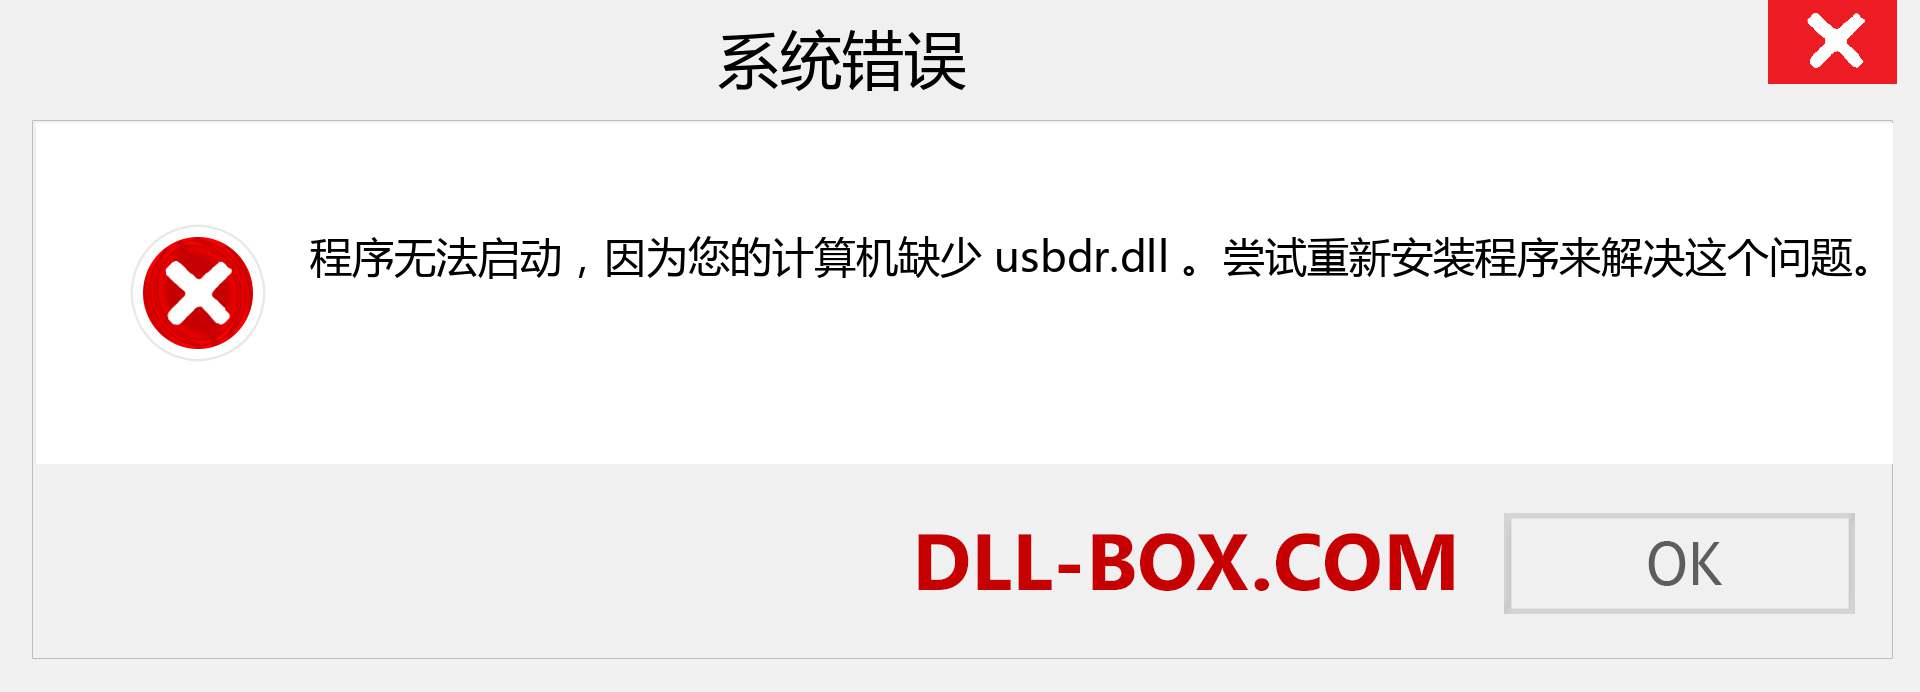 usbdr.dll 文件丢失？。 适用于 Windows 7、8、10 的下载 - 修复 Windows、照片、图像上的 usbdr dll 丢失错误